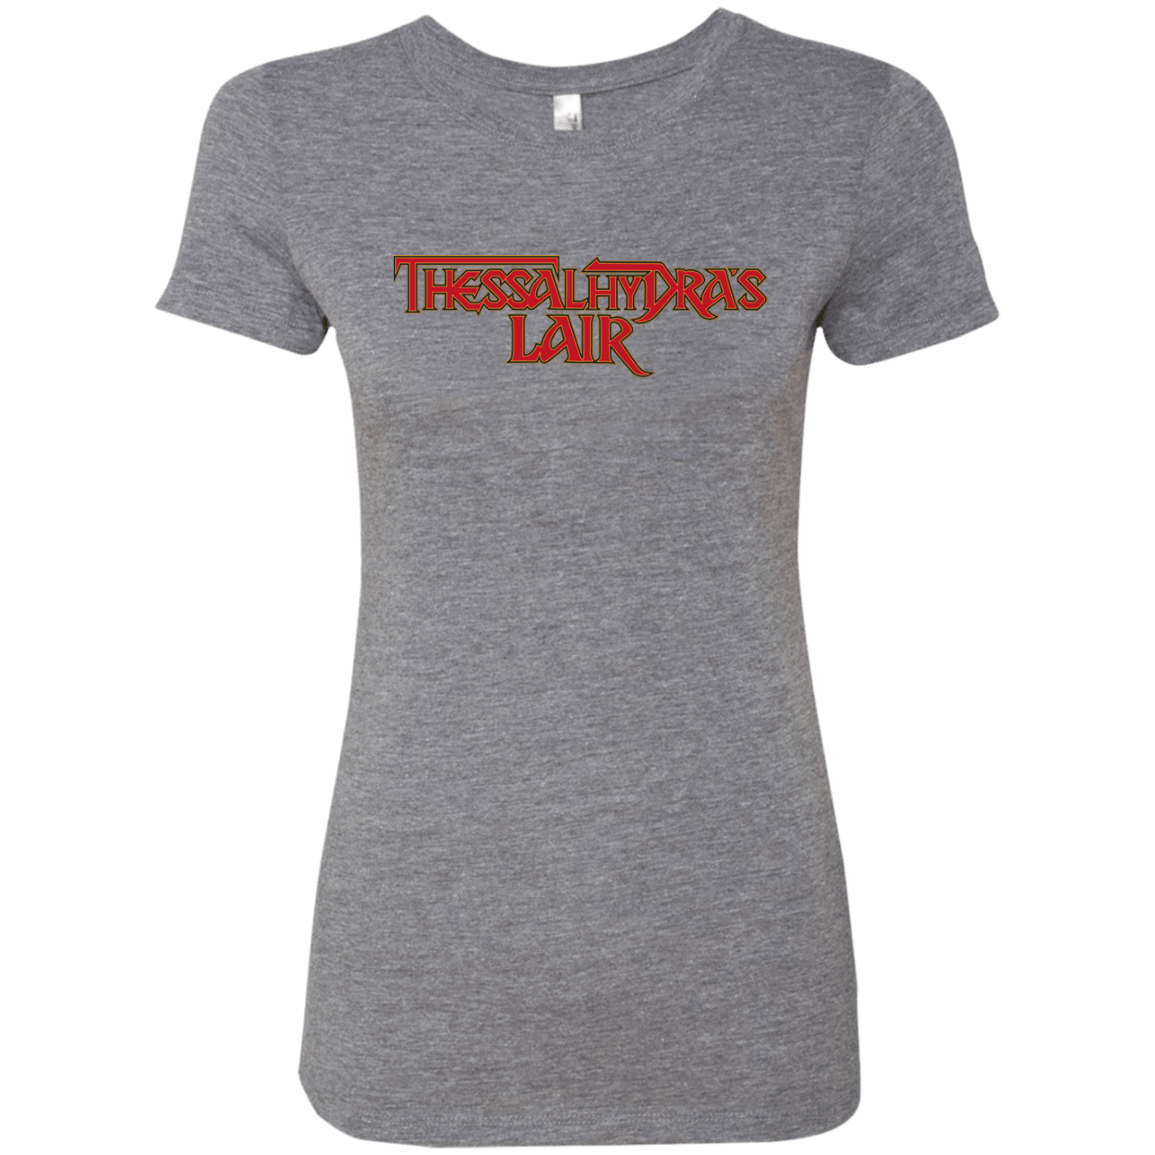 T-Shirts Premium Heather / S Thessalhydras Lair Women's Triblend T-Shirt